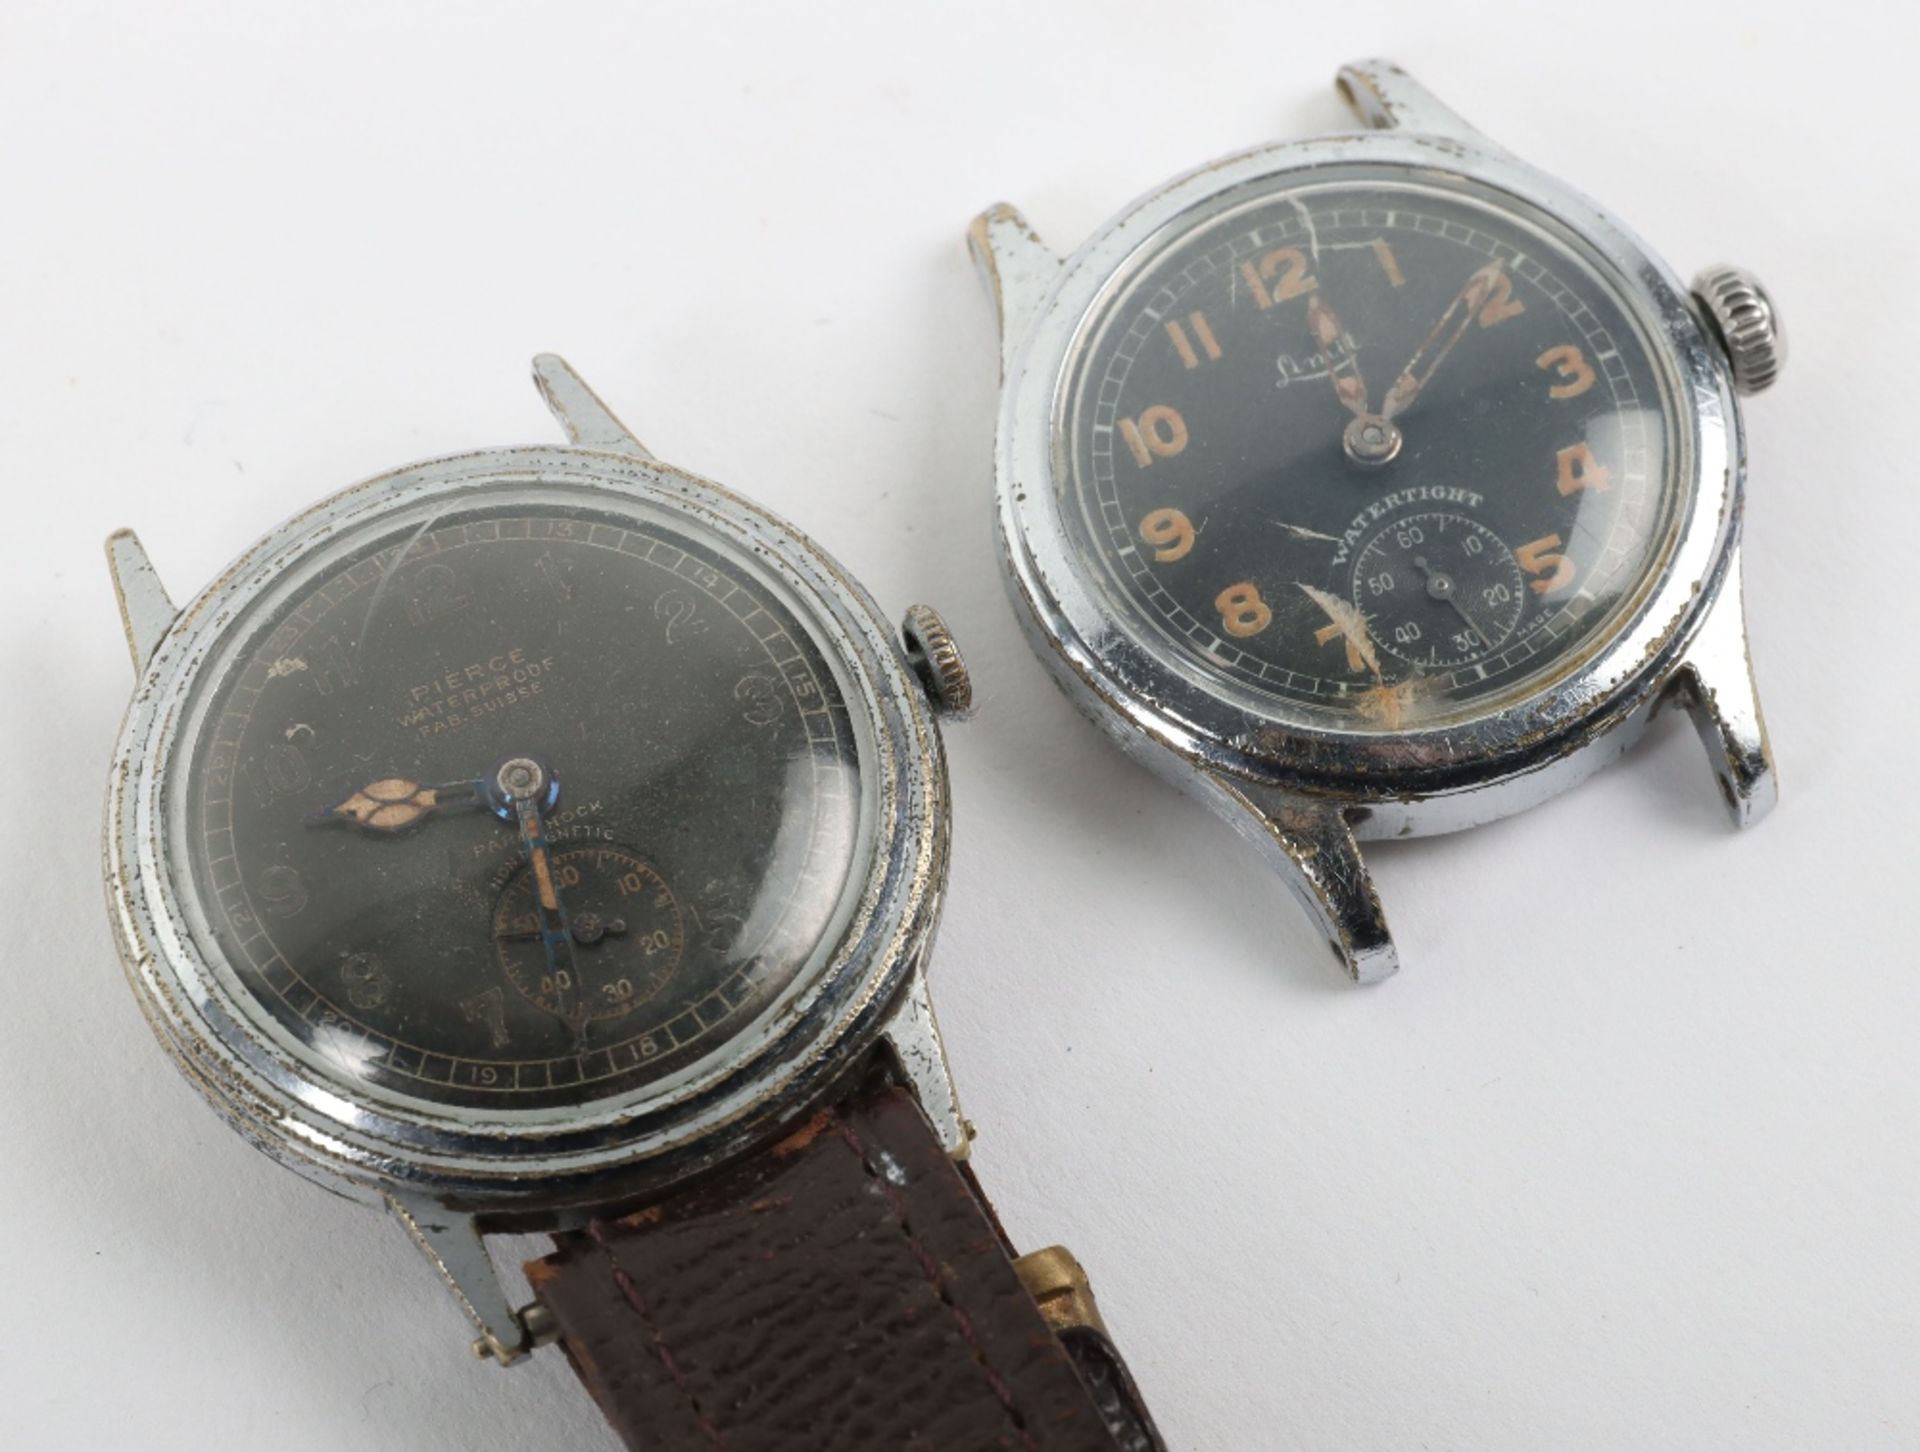 1940’s Period Wristwatch by Pierce - Image 2 of 4